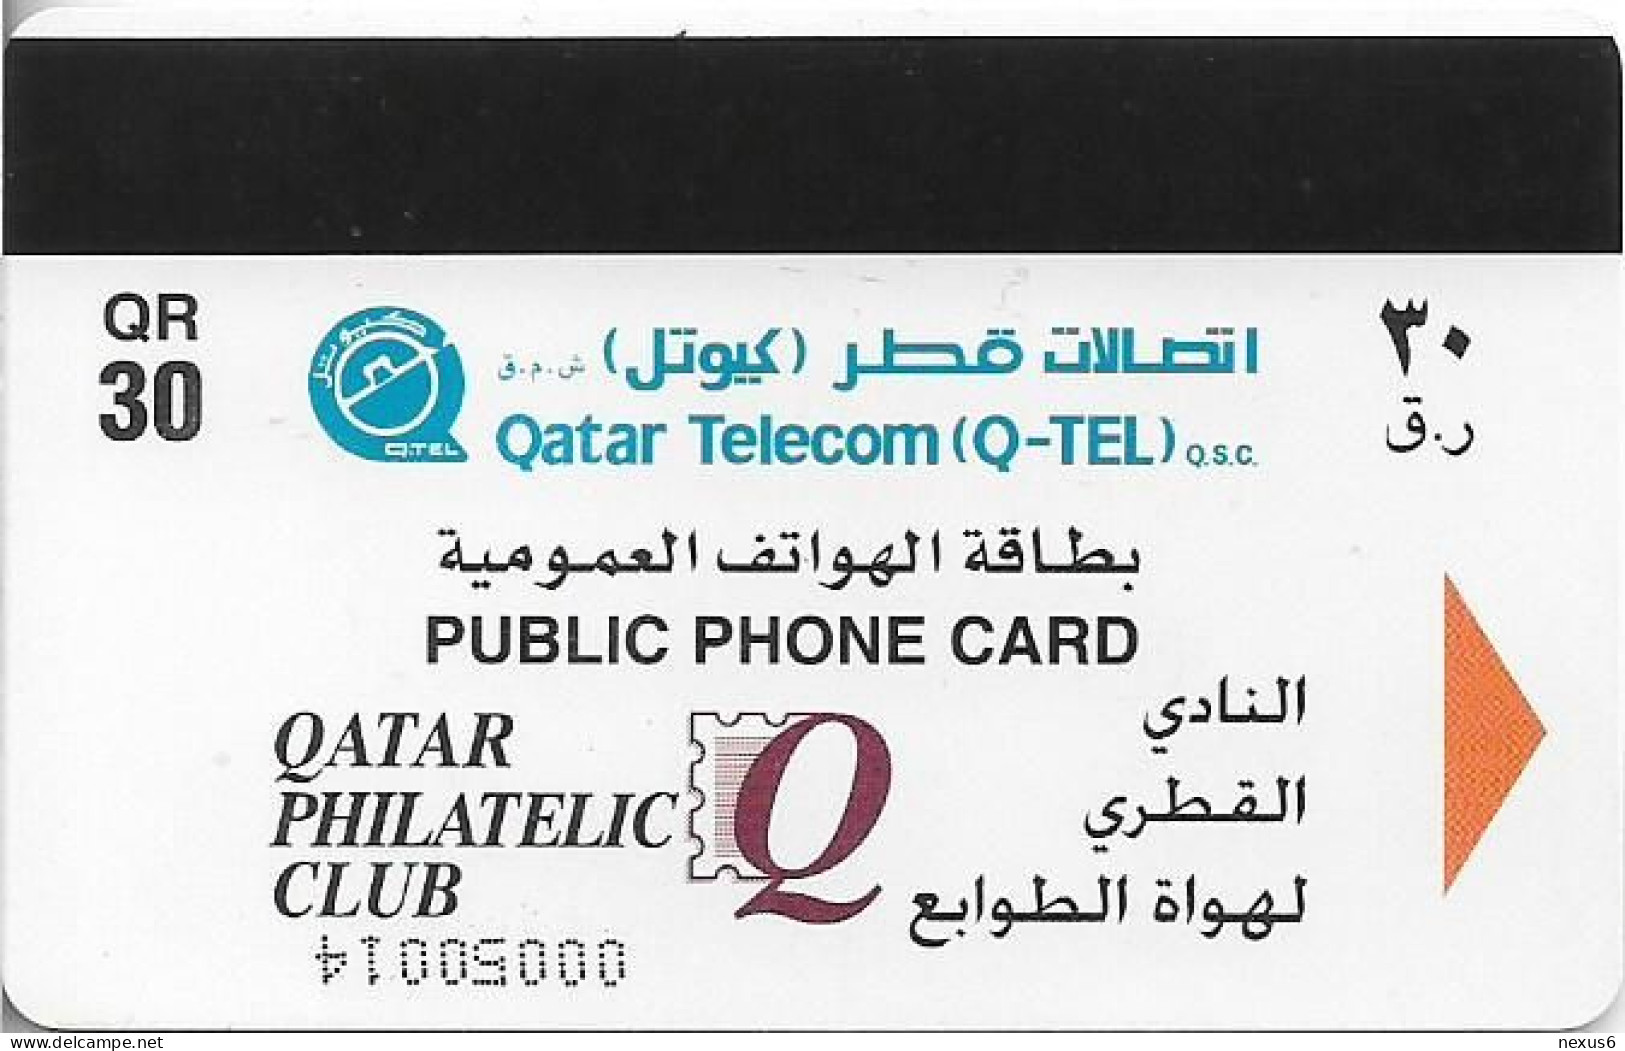 Qatar - Q-Tel - Autelca - Qatar Philatelic Club Stamps 2, 2001, 30QR, Used - Qatar